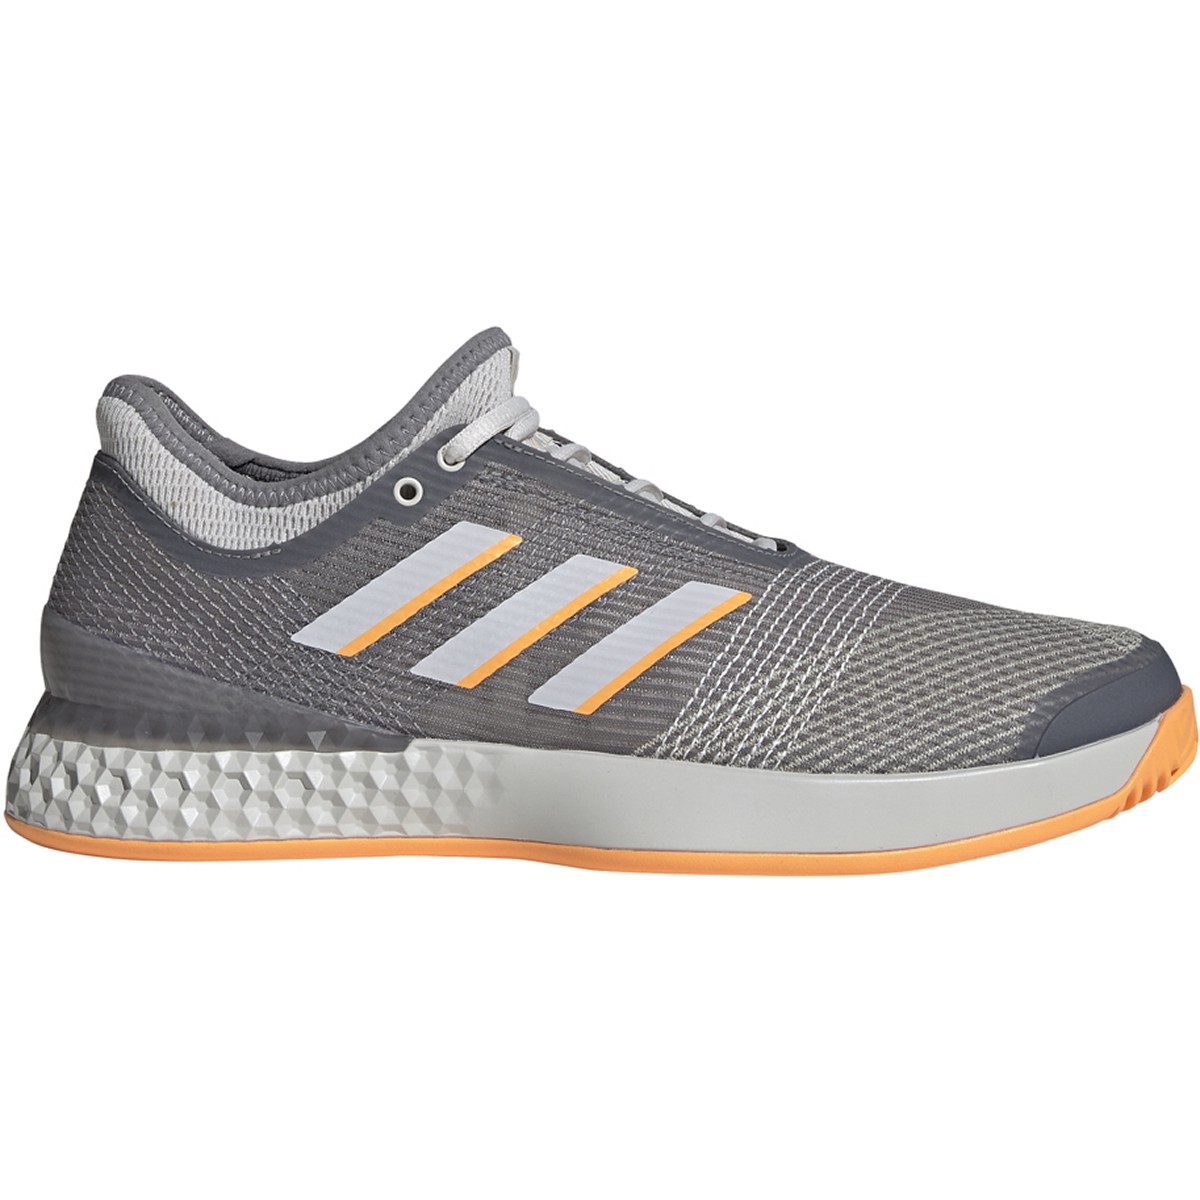 Adidas Men&amp;apos;s Adizero Ubersonic 3.0 Tennis Shoes (Grey/Flash Orange)